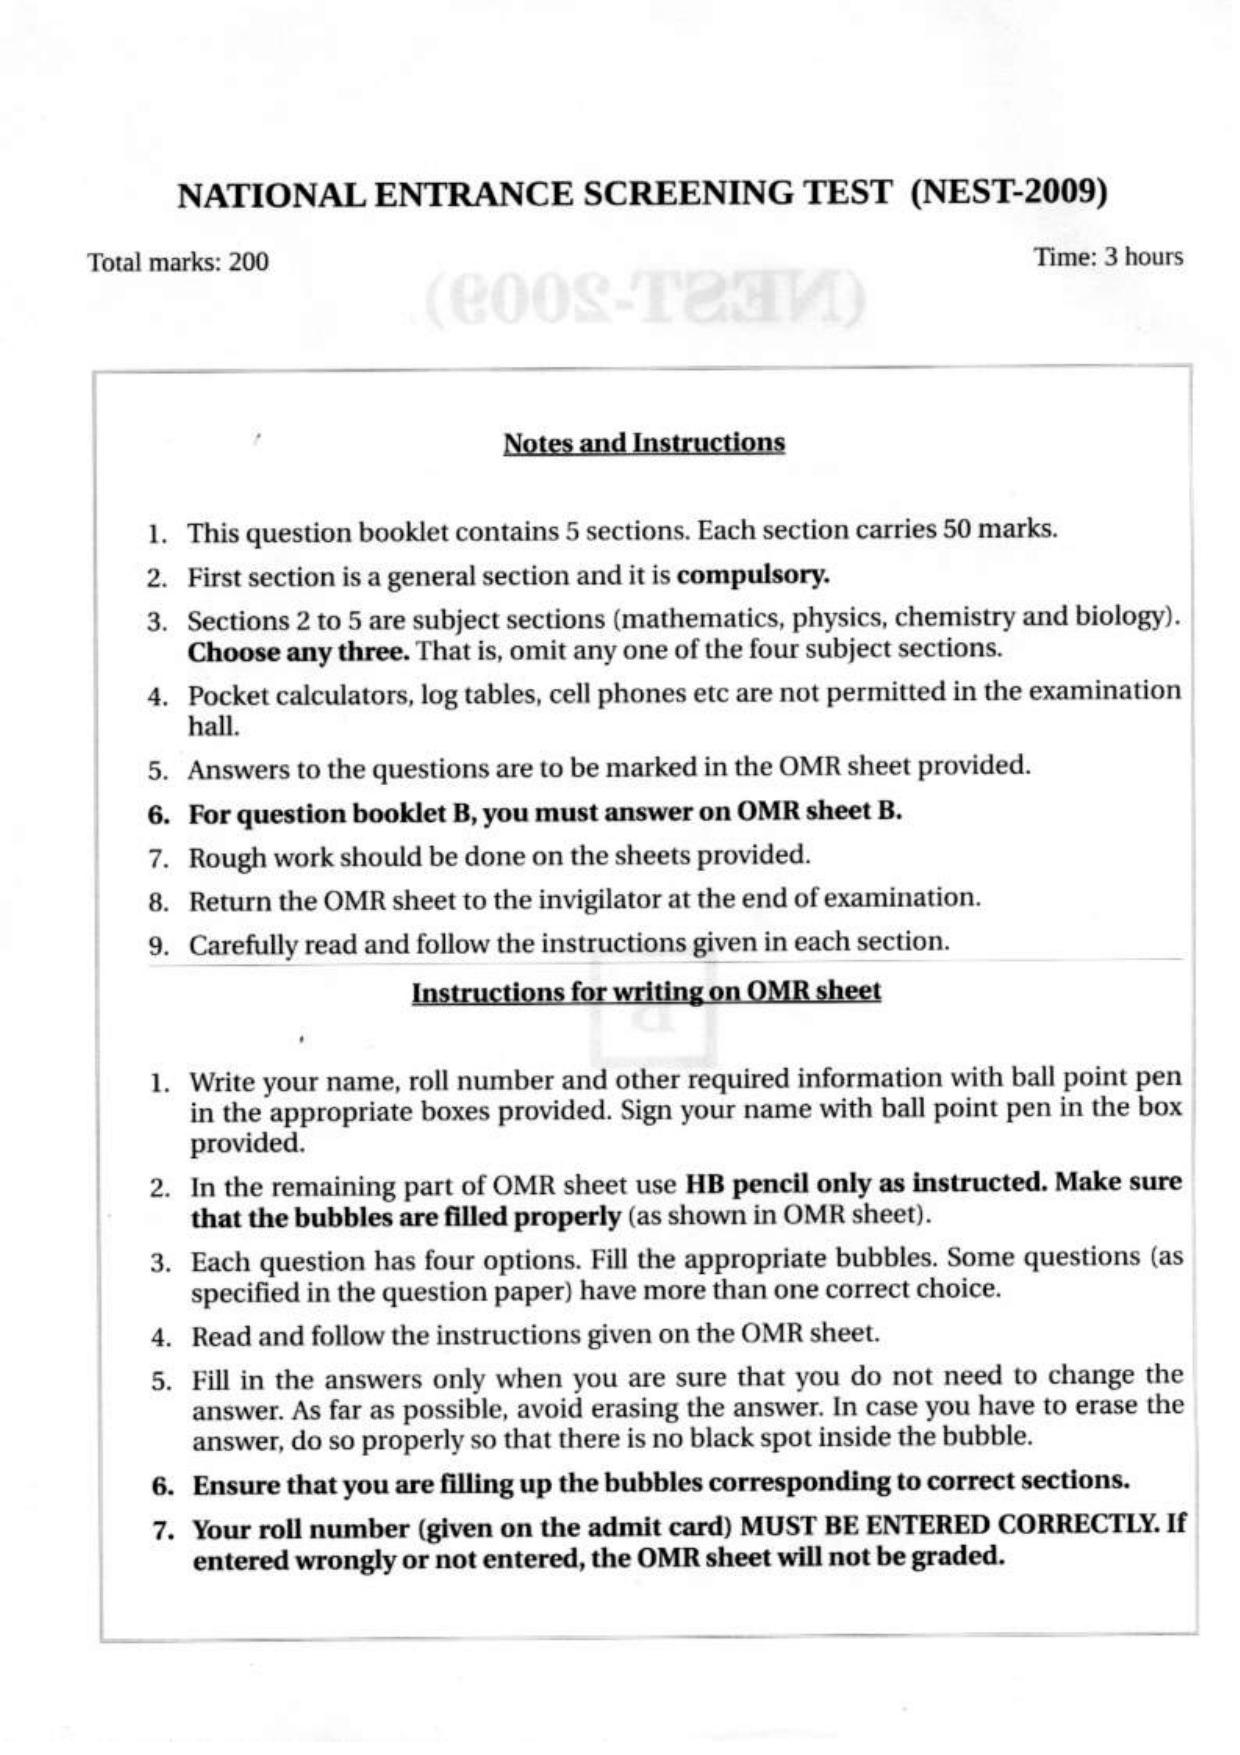 NEST 2009 Question Paper - Page 26